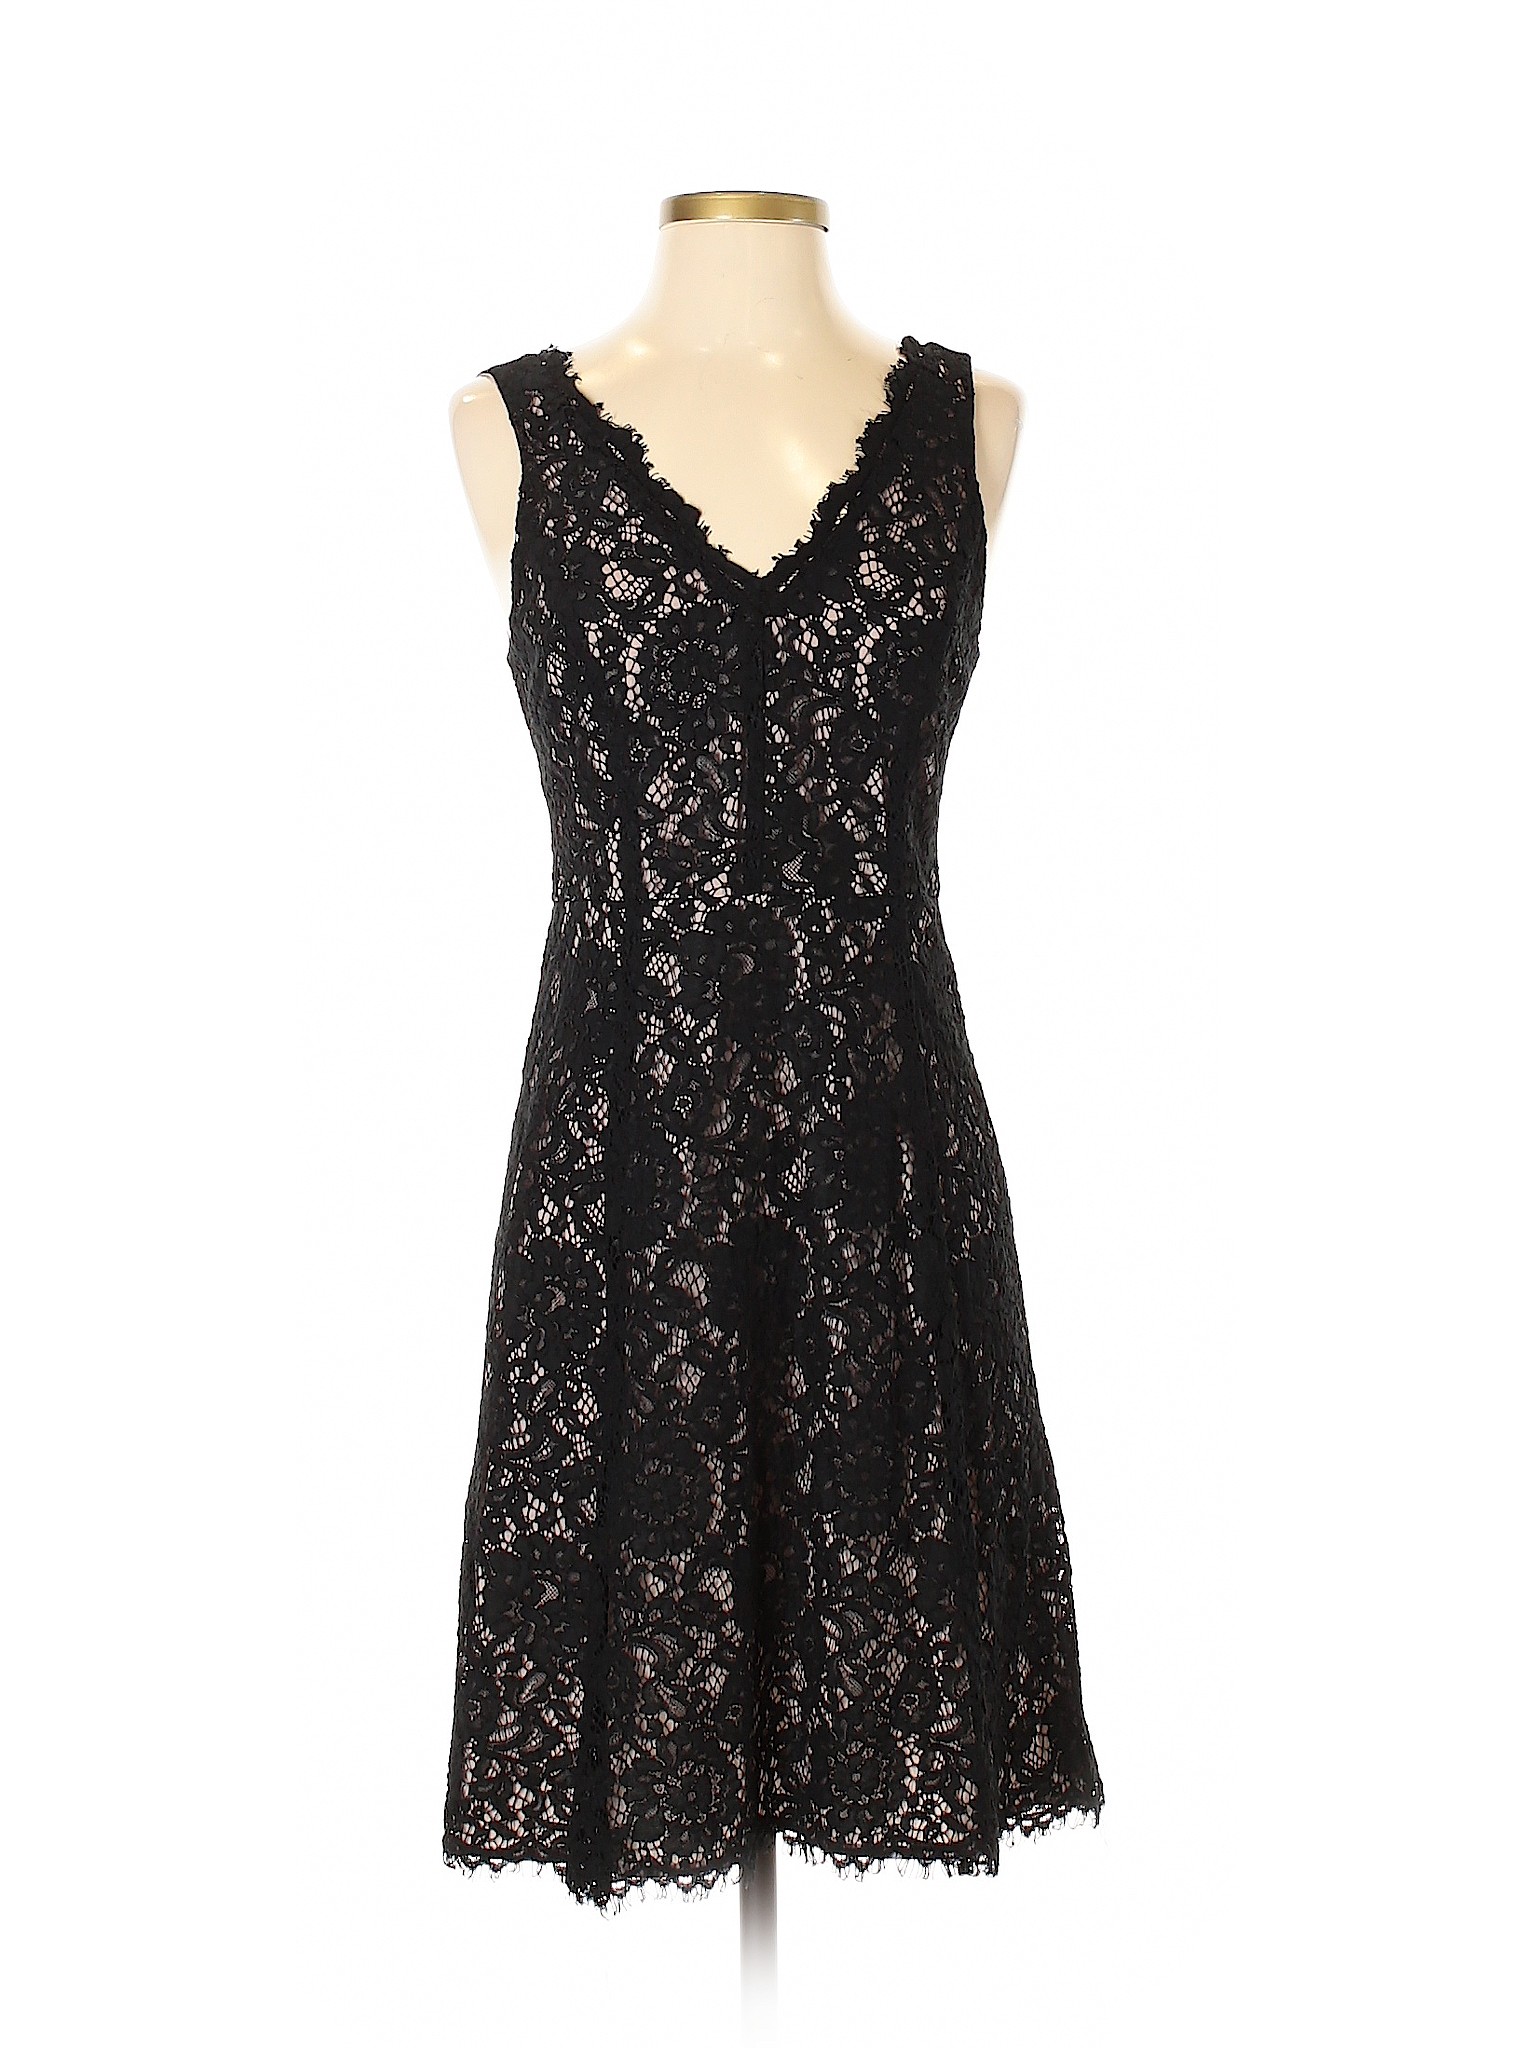 Ann Taylor Loft Women Black Cocktail Dress 0 | eBay